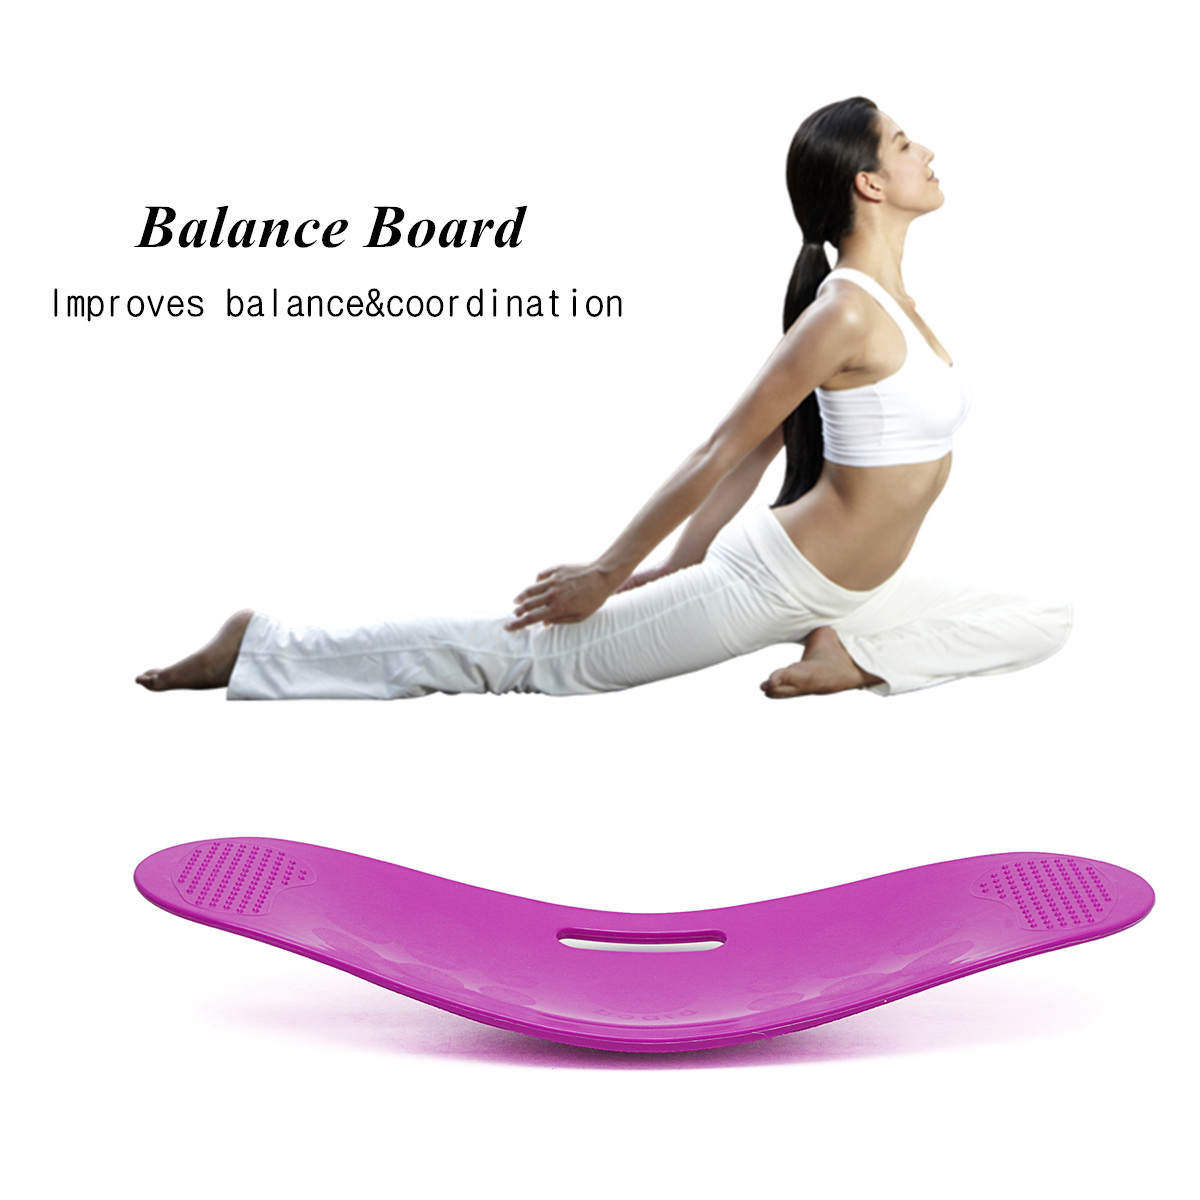 Twisting Fitness Balance Board Simple Core Workout Yoga Gym Fitness Training Prancha Abdominal Leg Training Balance Exercise